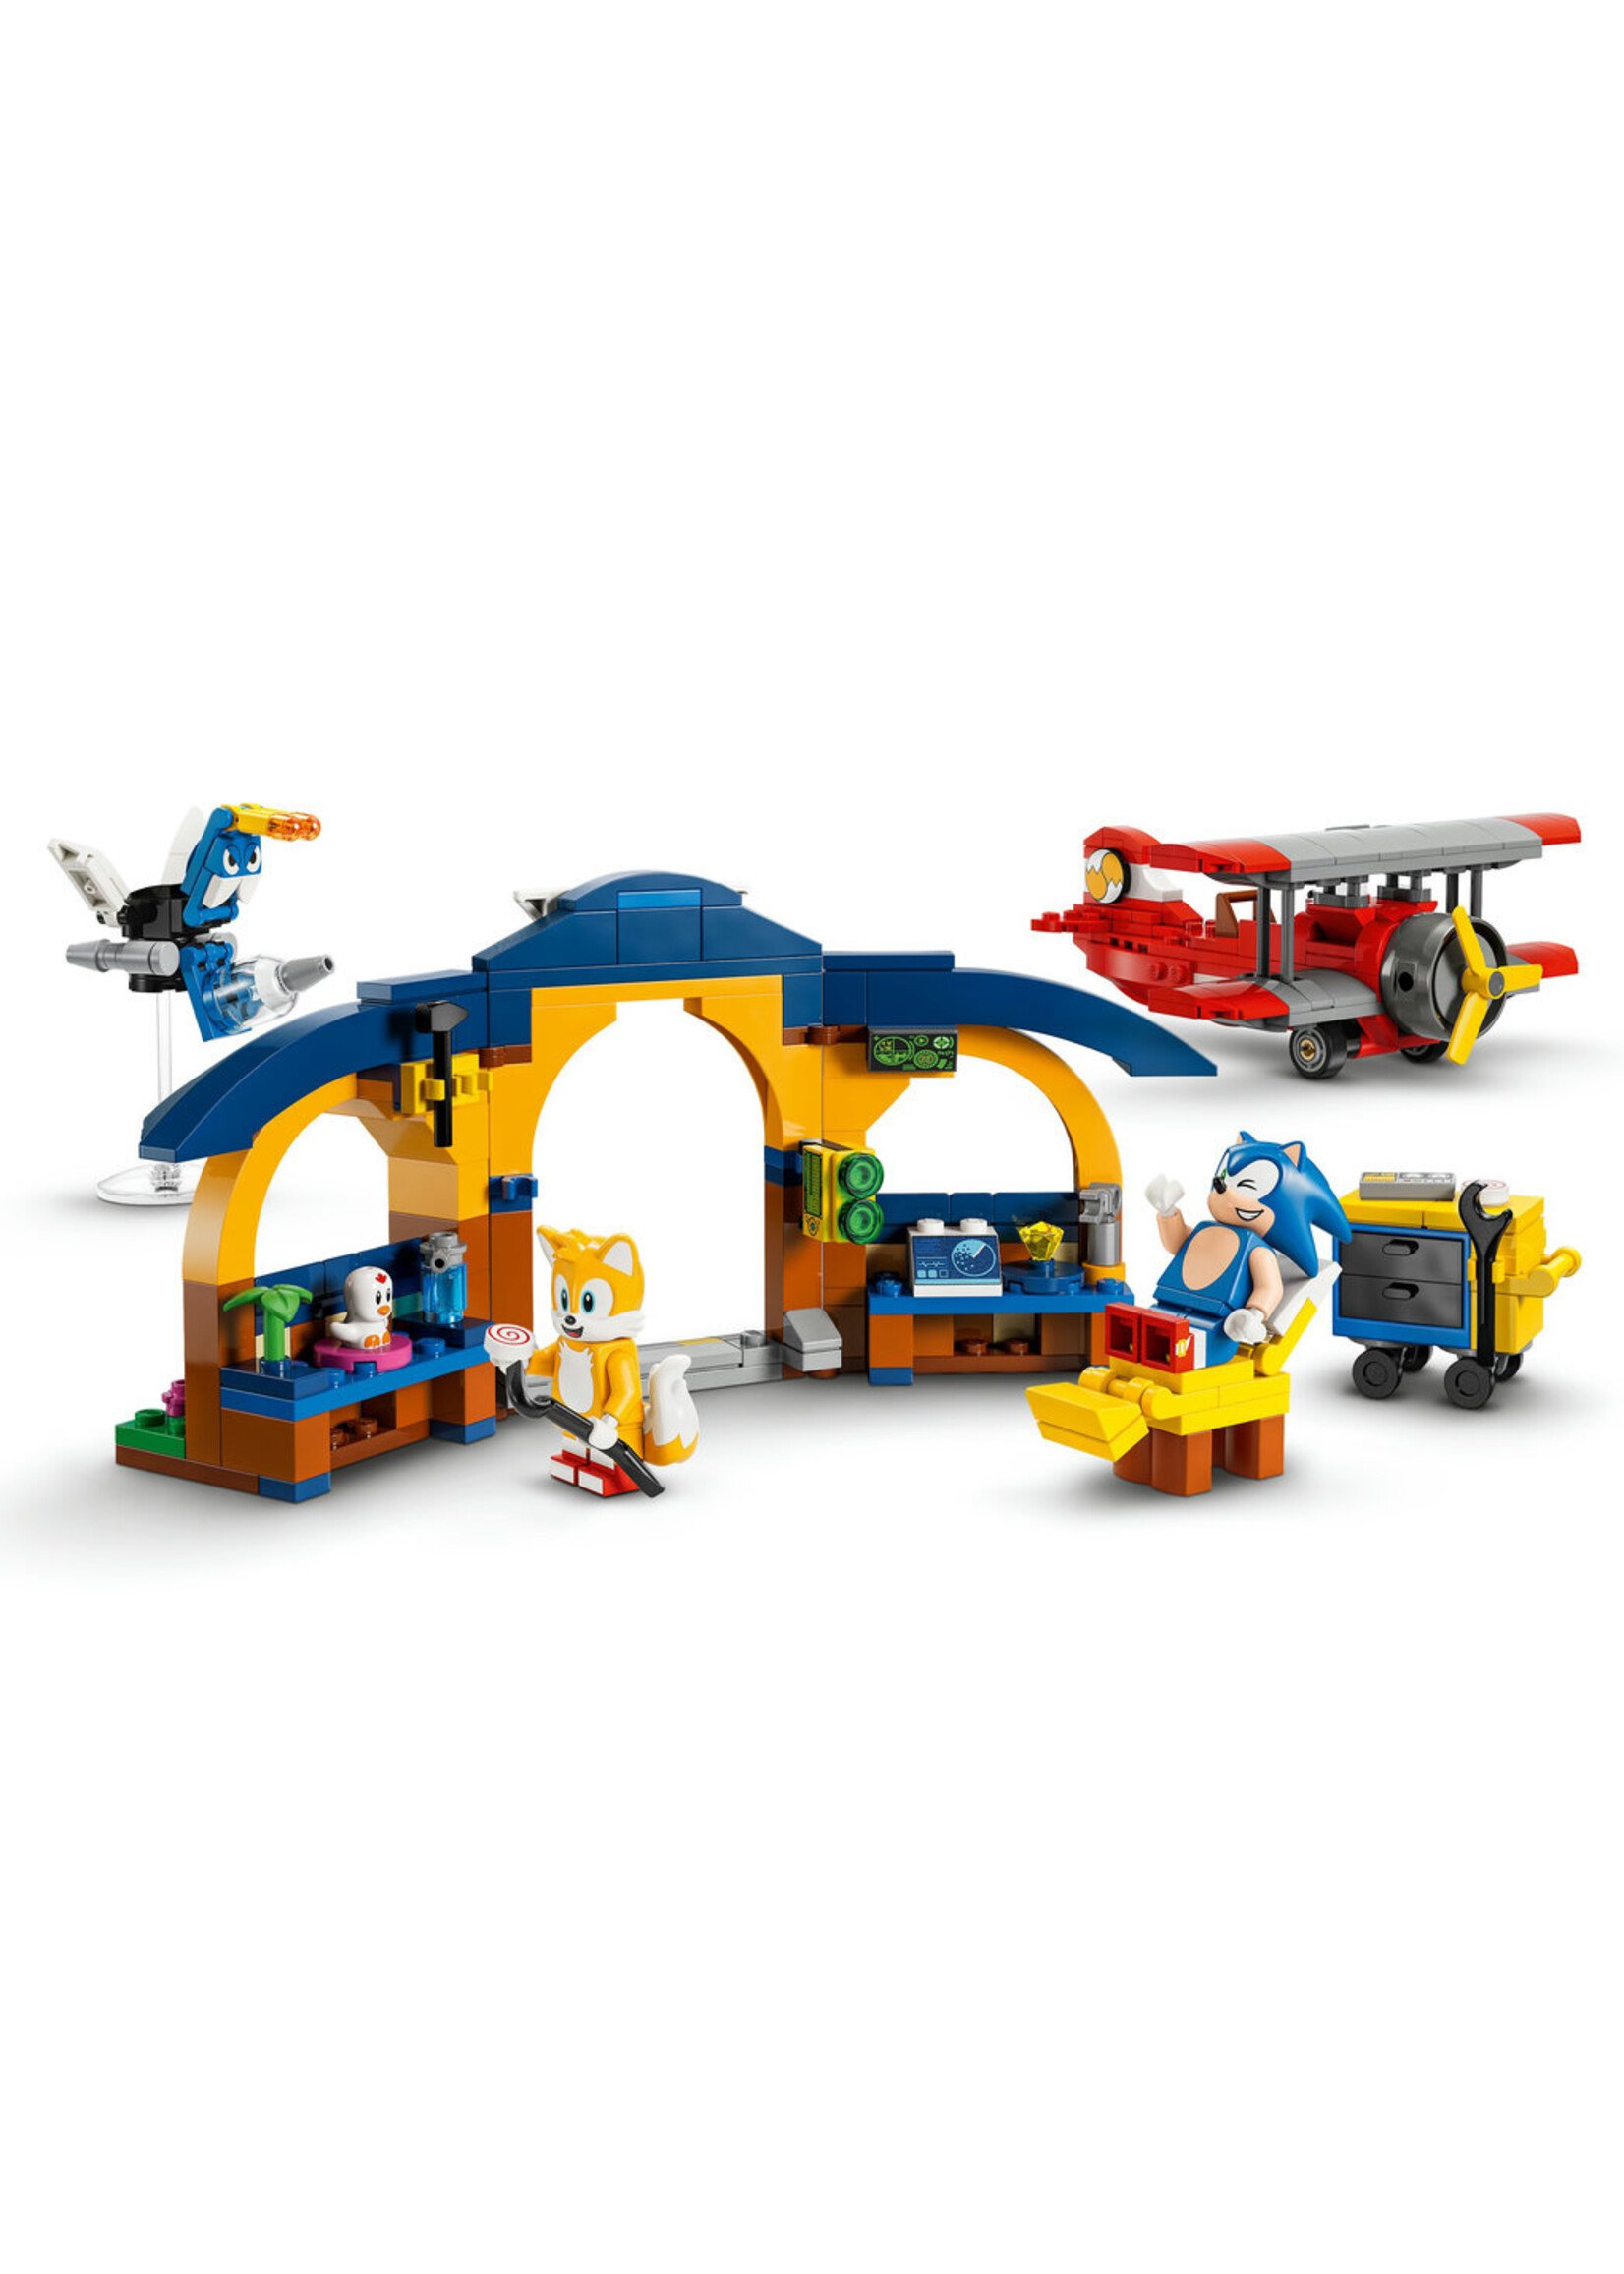 LEGO 76991 - Tails' Workshop and Tornado Plane